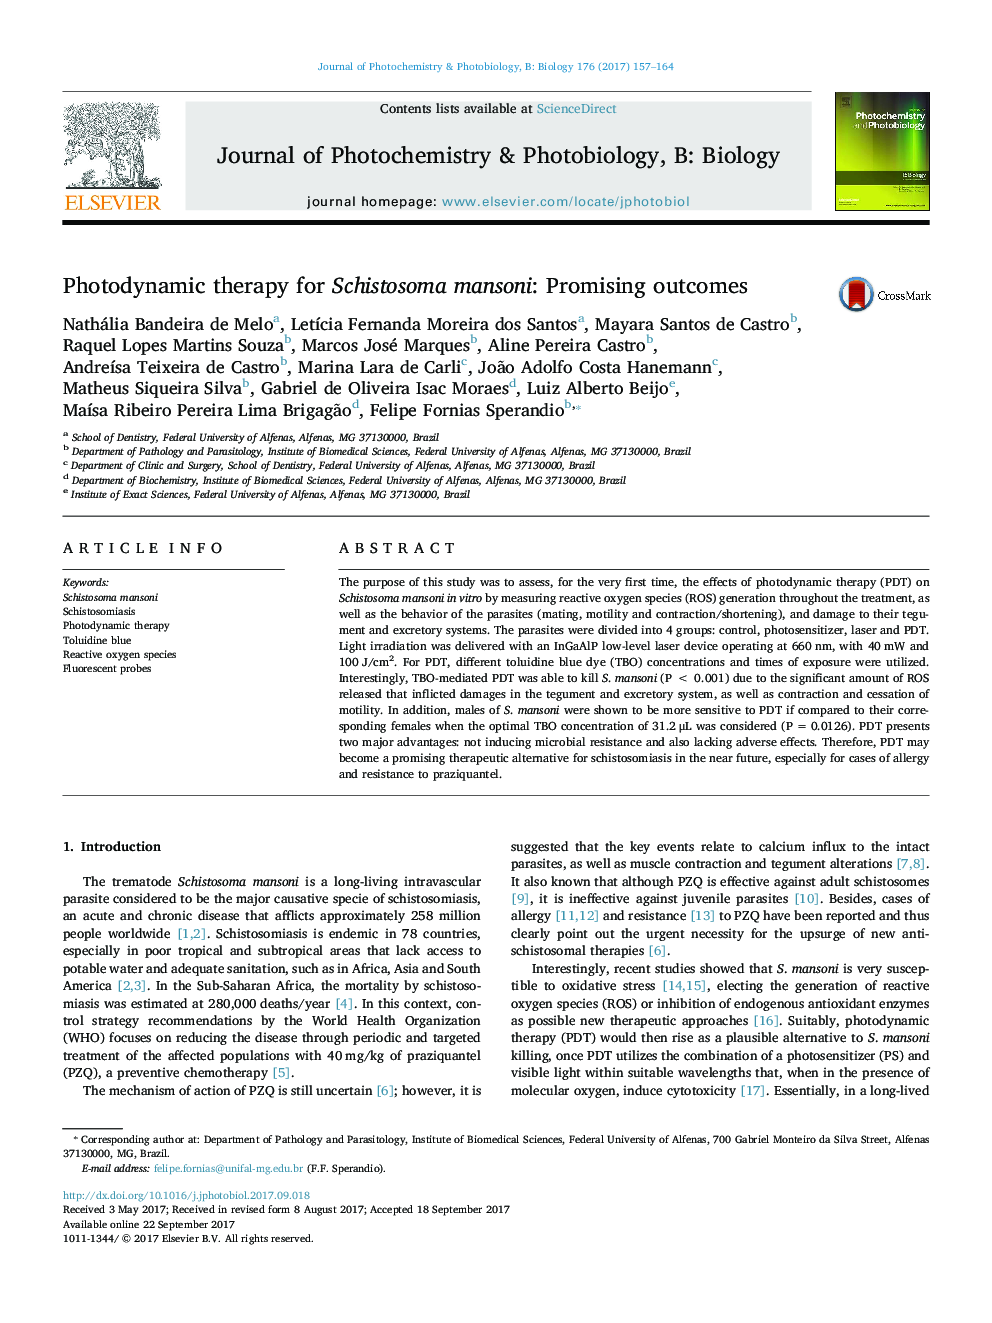 Photodynamic therapy for Schistosoma mansoni: Promising outcomes